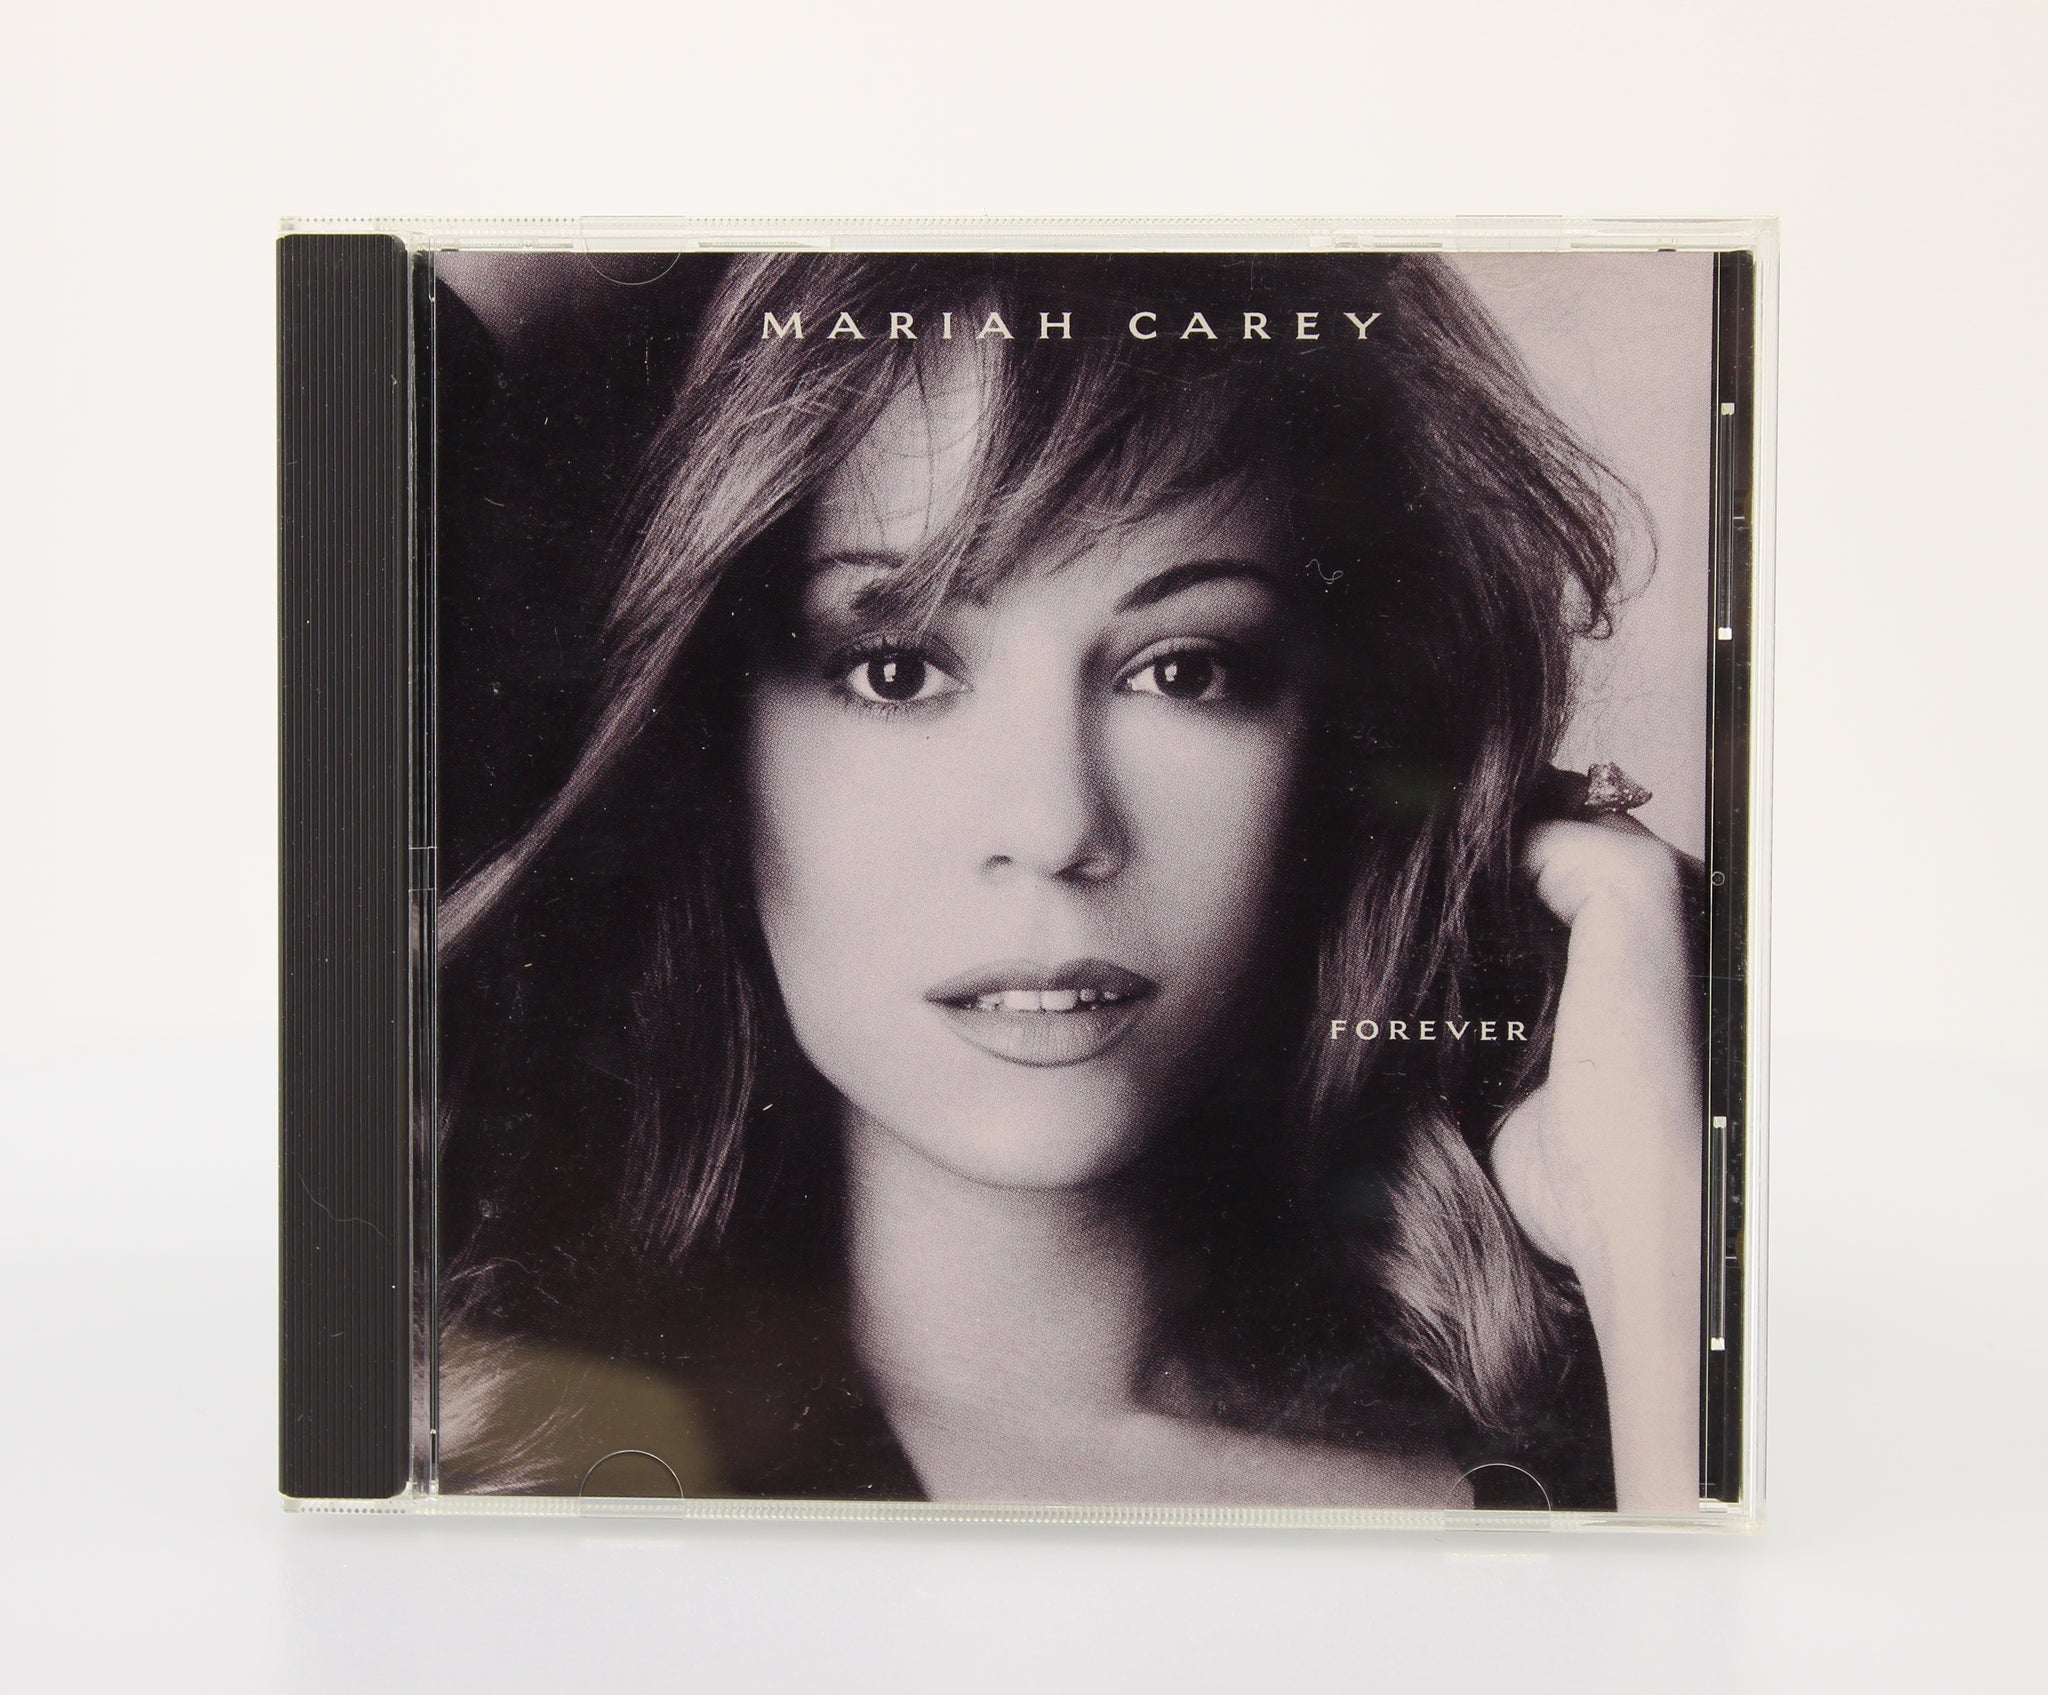 Mariah Carey, Forever, CD Single Promo, US 1996 (CD 650 